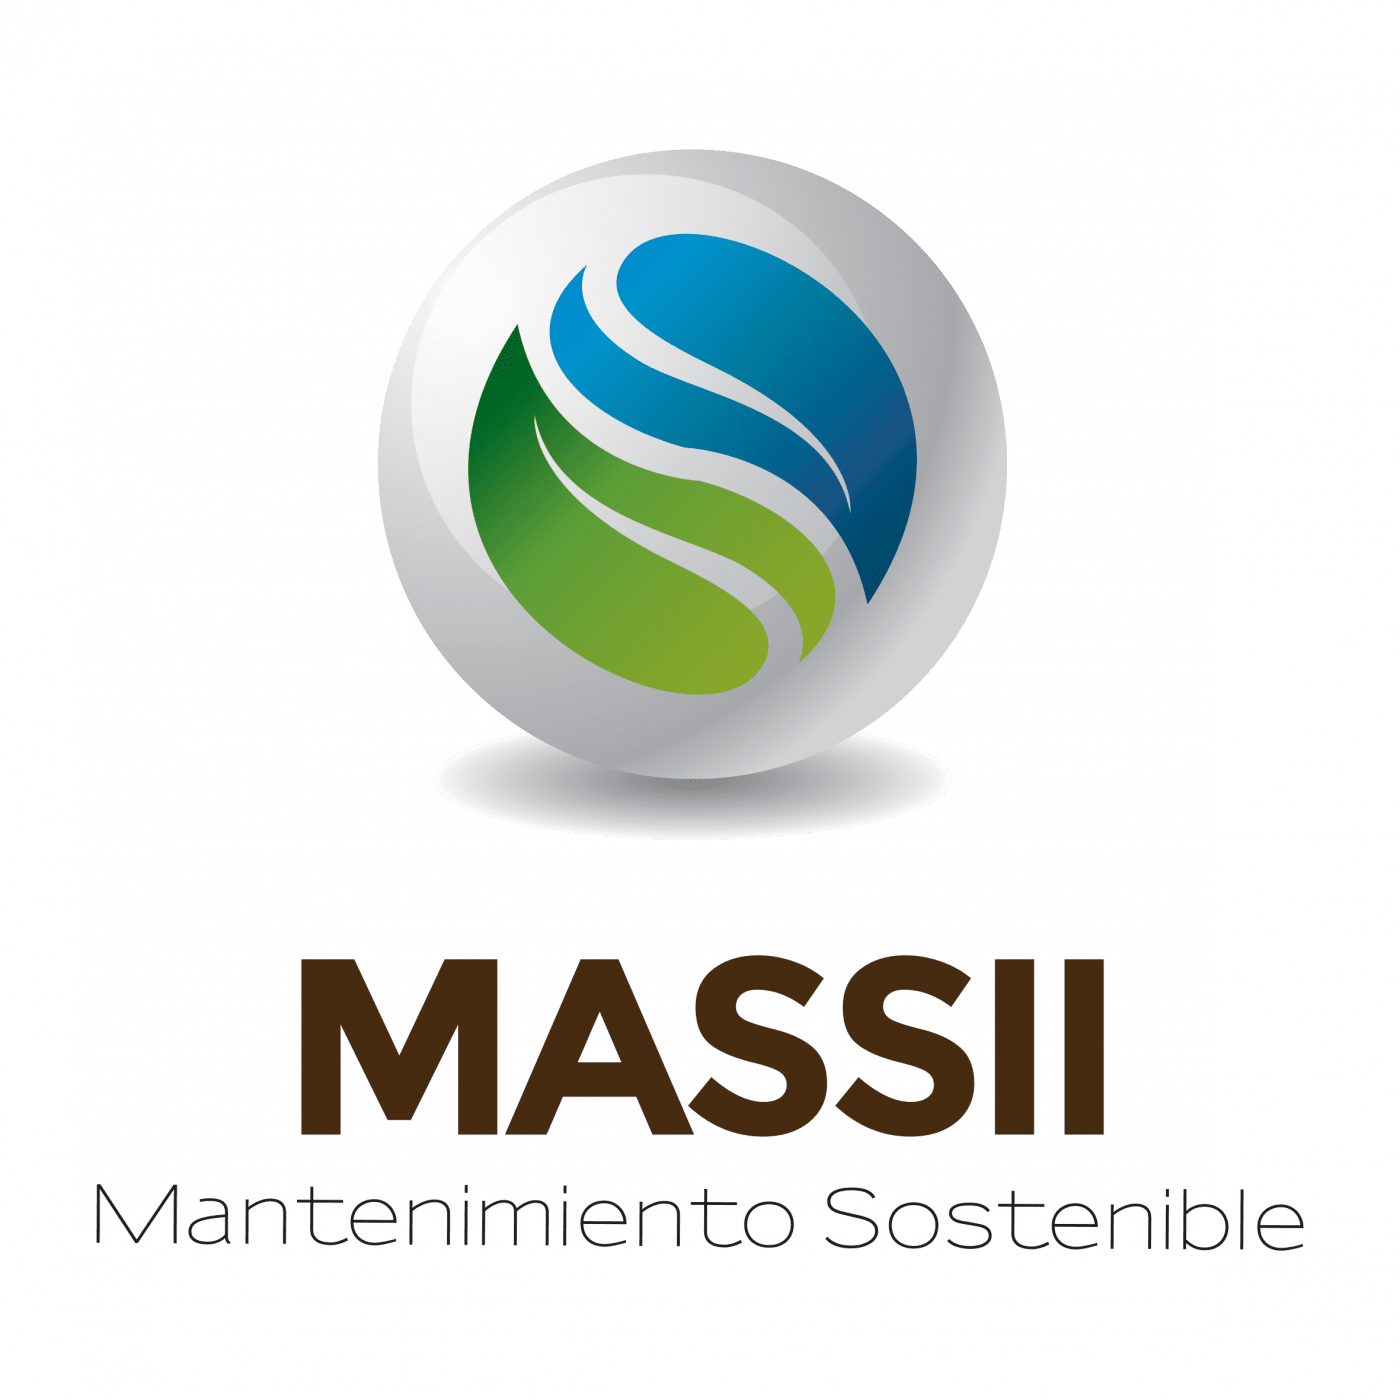 Massii - Mantenimiento Sostenible Integral